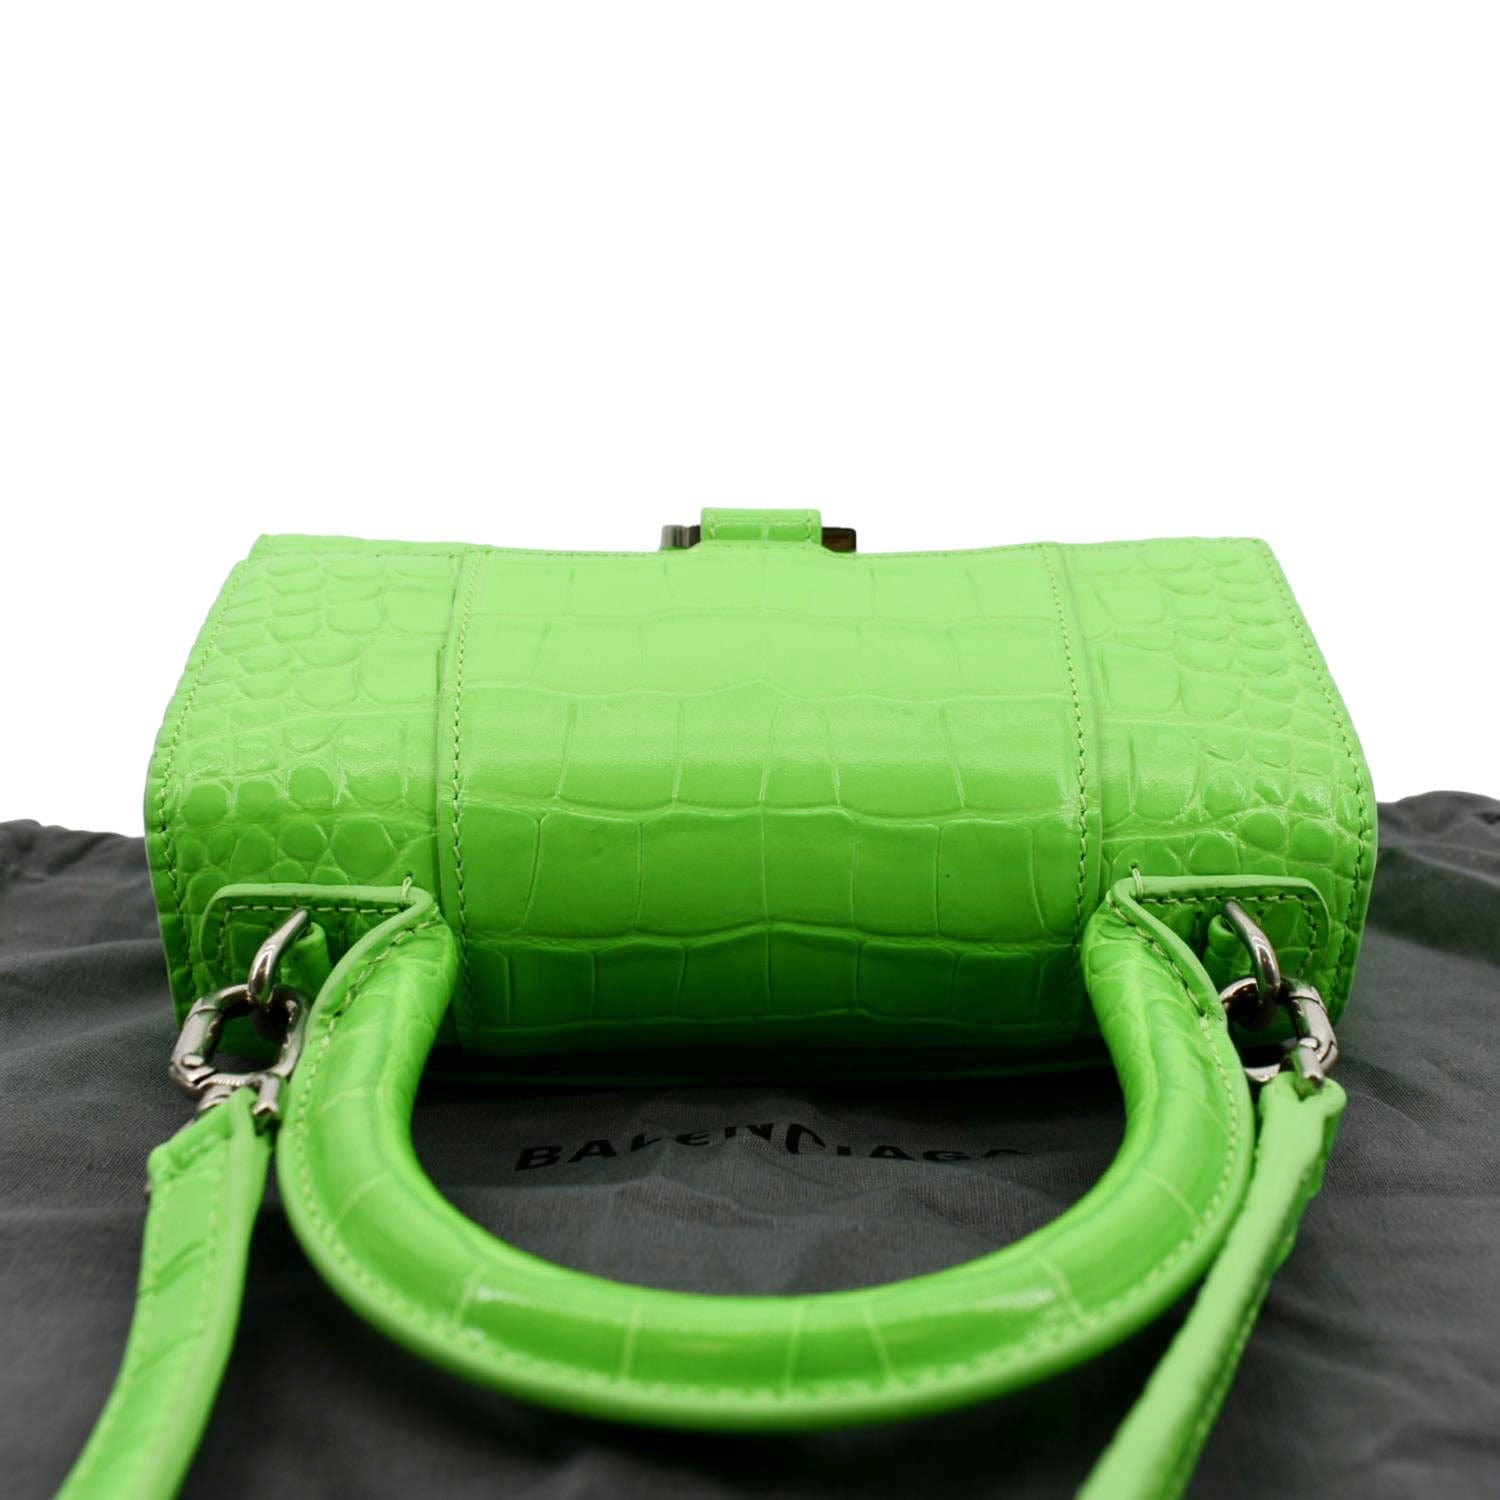 Hourglass Small Shiny Croc-Embossed Top-Handle Bag